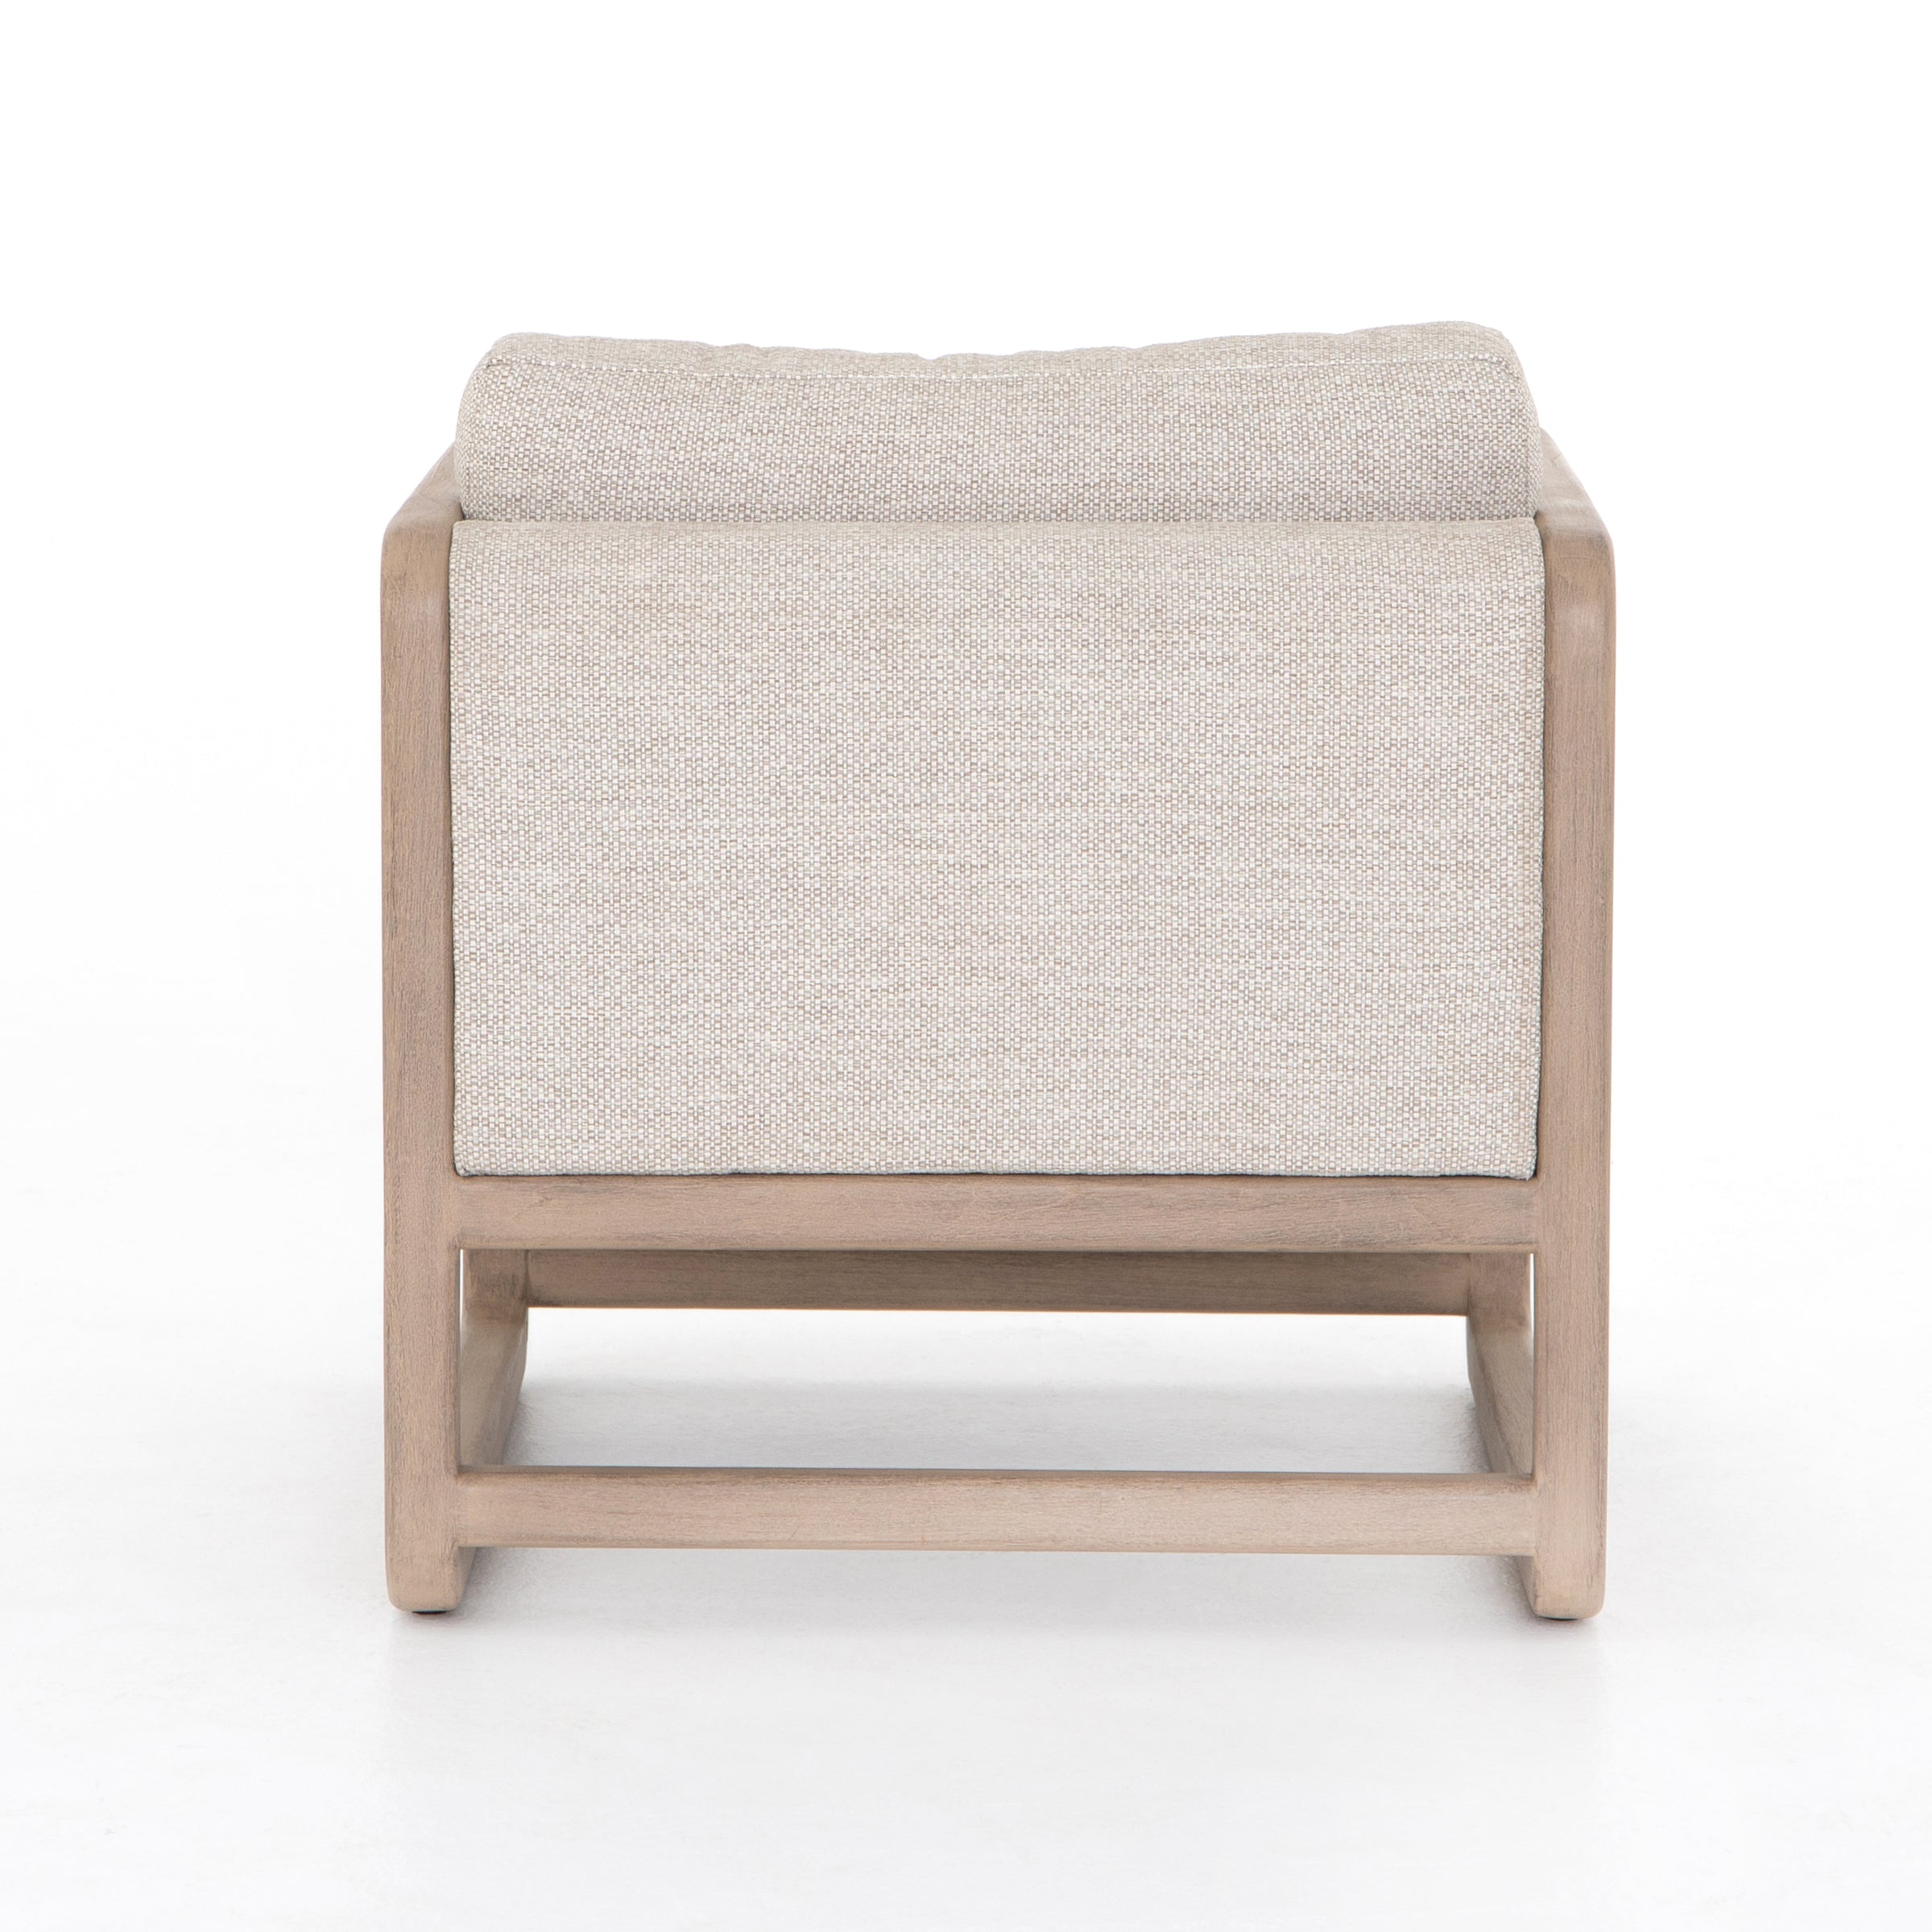 Callan Outdoor Chair - StyleMeGHD - Modern Home Decor